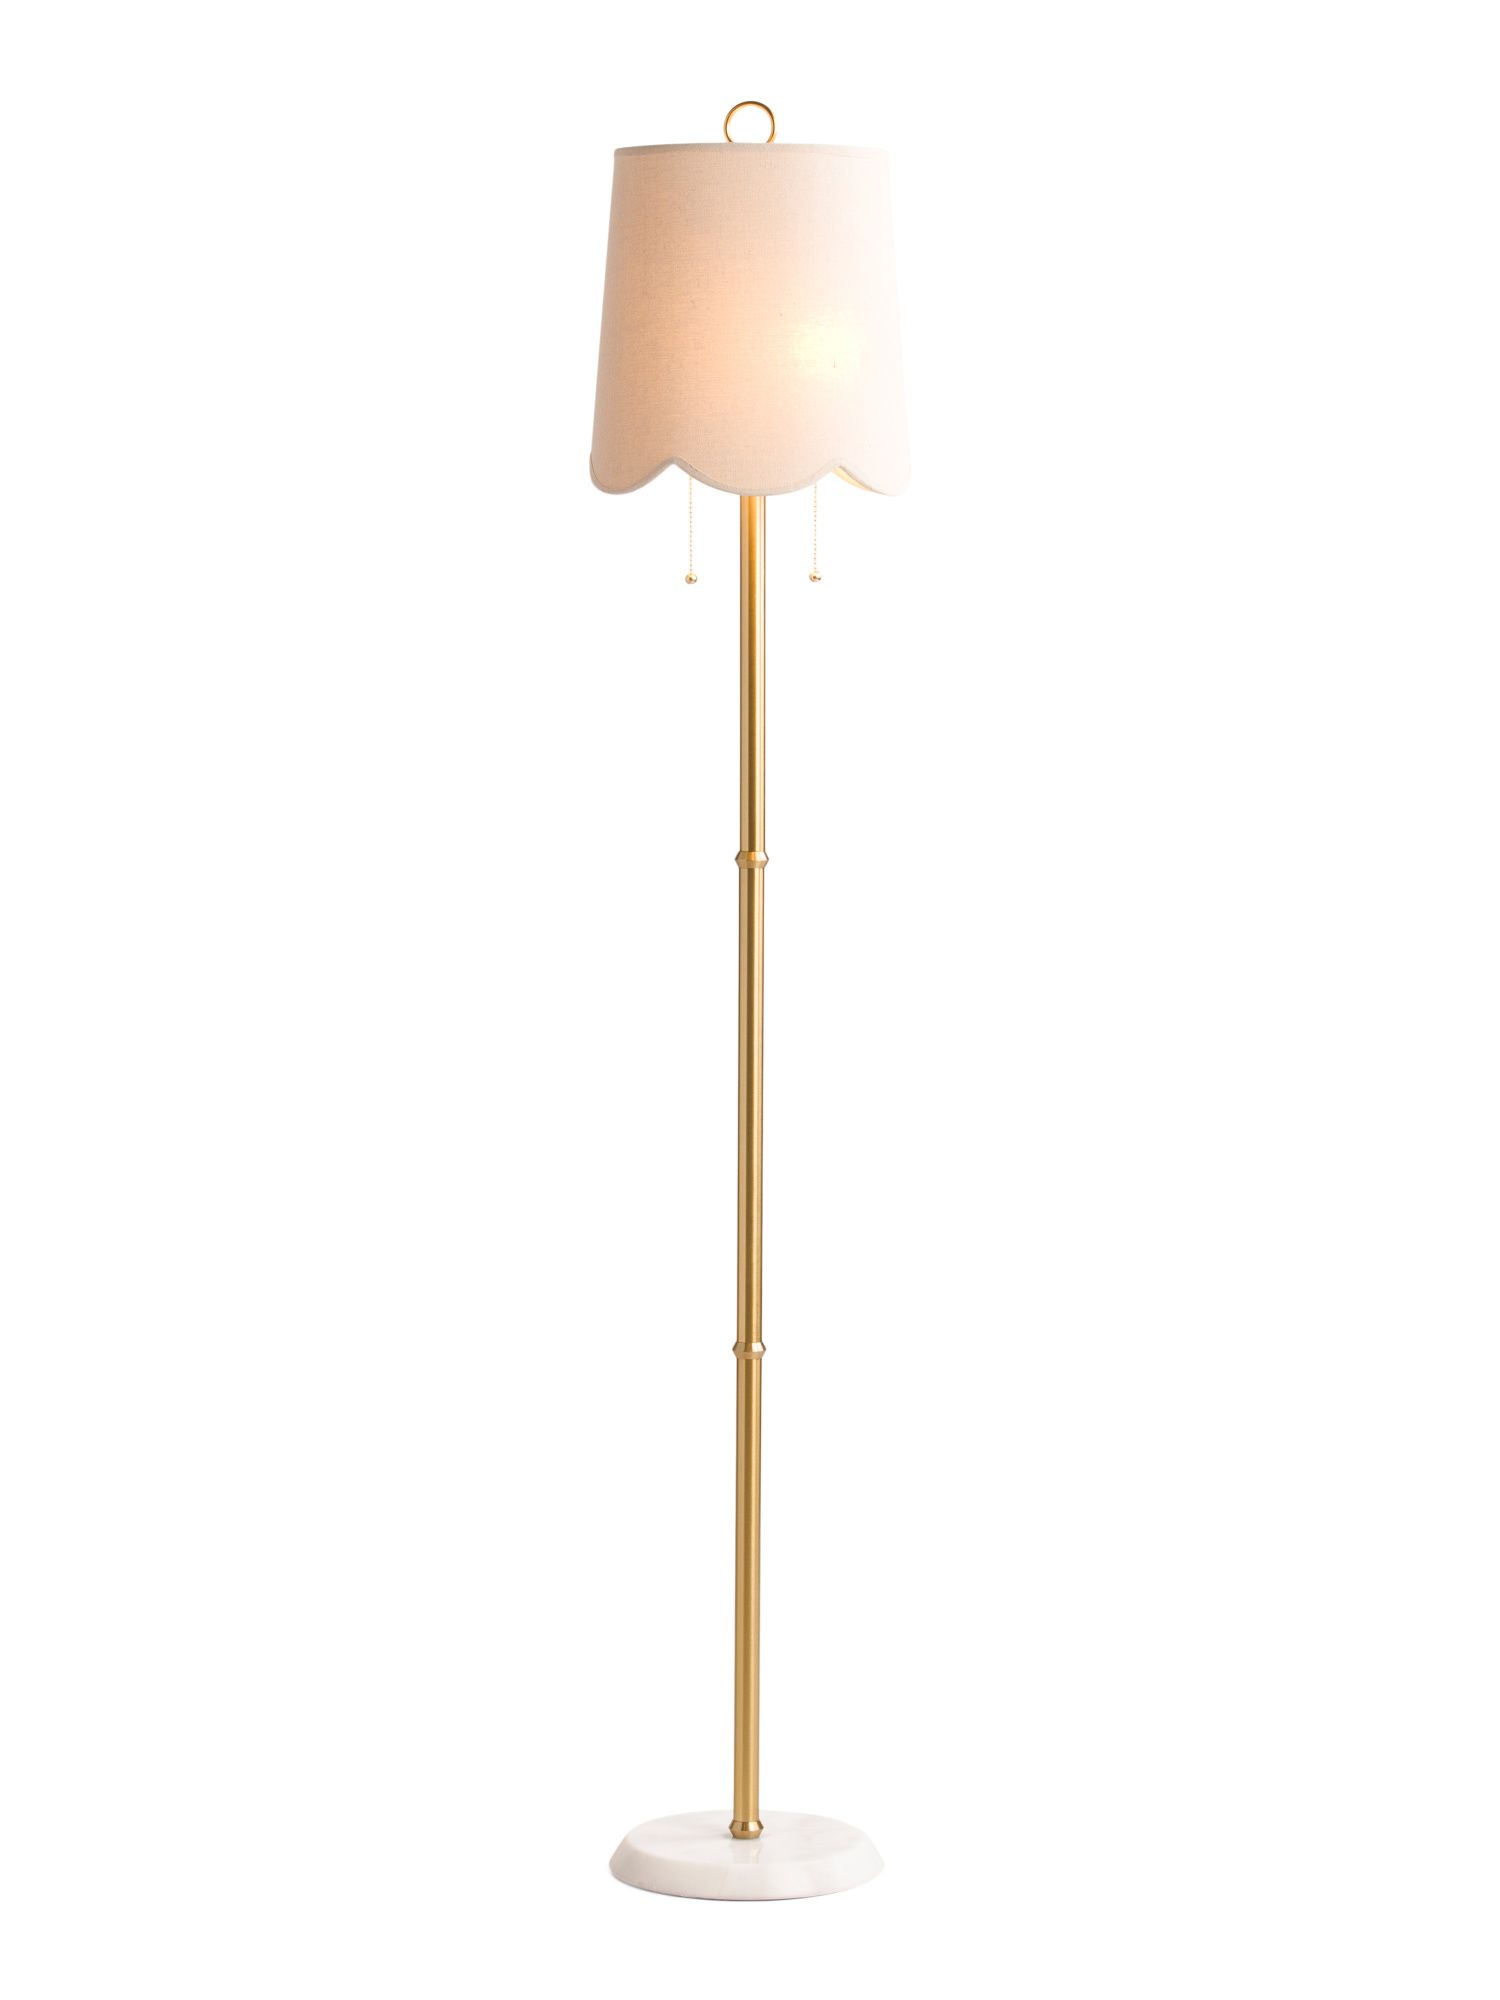 65in Floor Lamp With Scalloped Shade | Furniture & Lighting | Marshalls | Marshalls